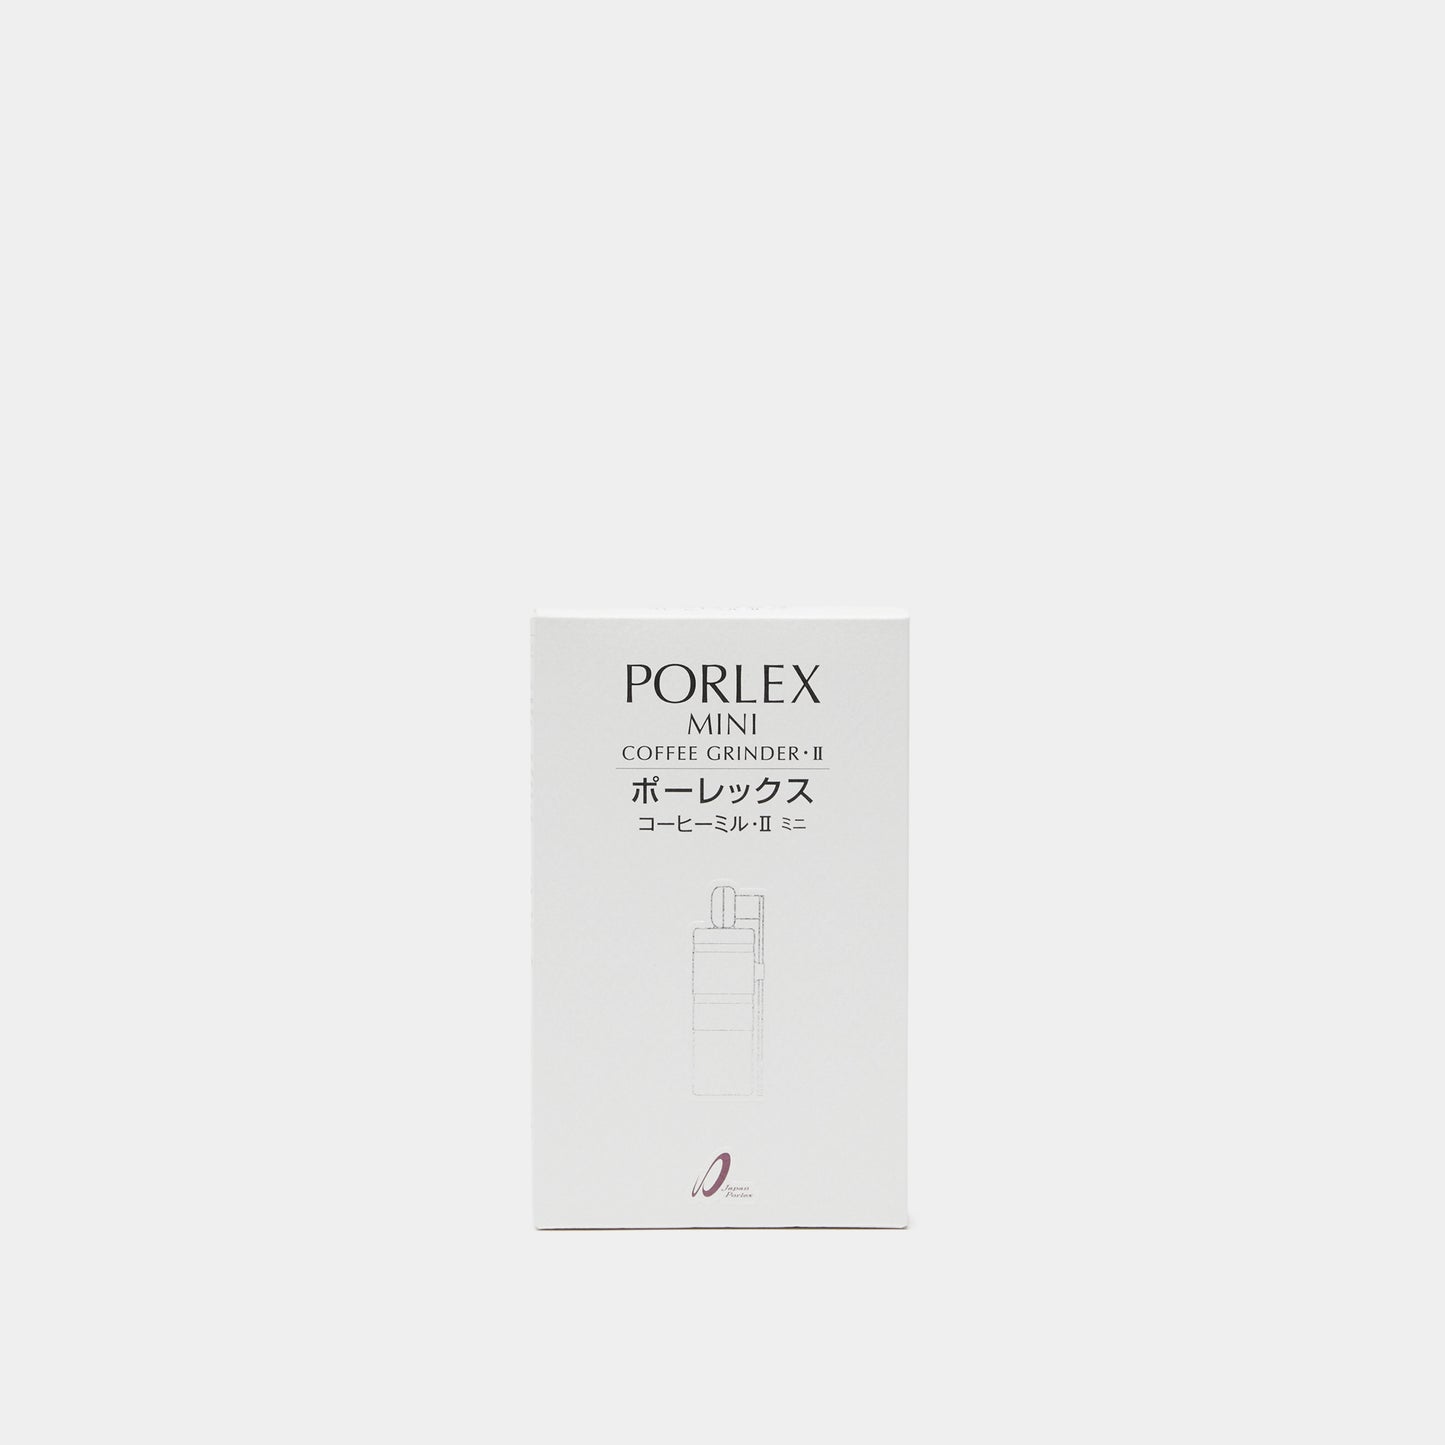 Porlex Mini Coffee Grinder II